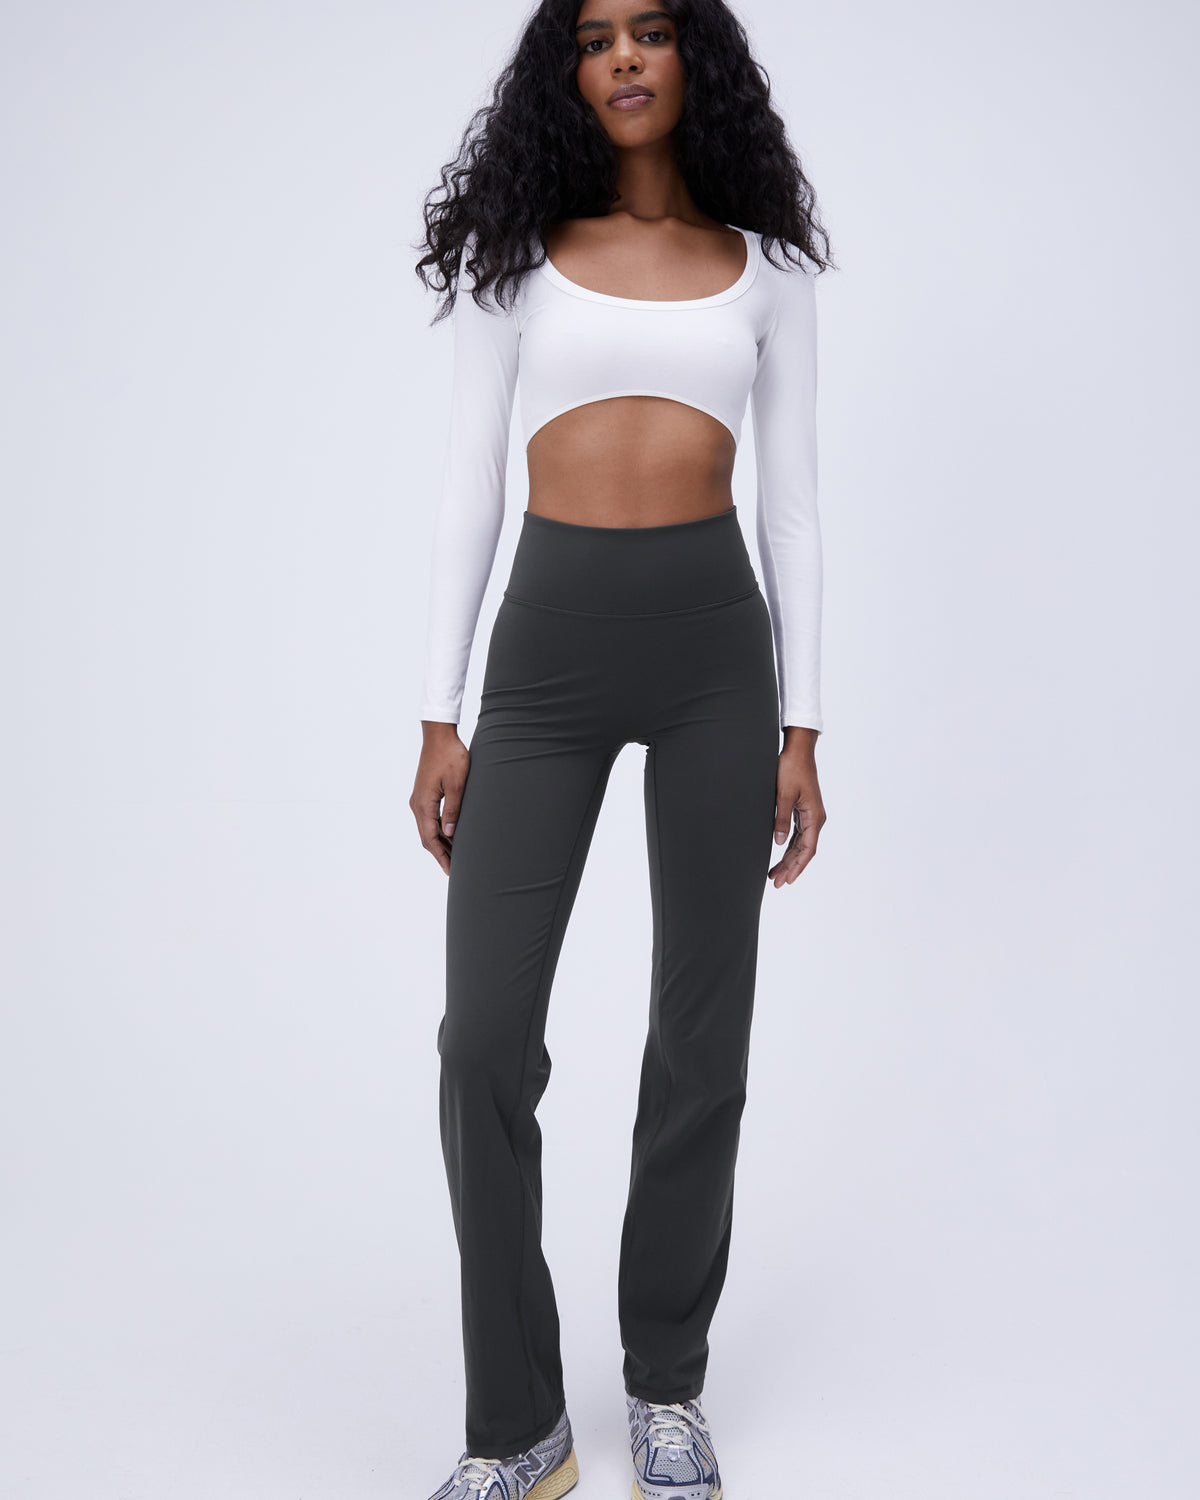 Cotton Yoga Pant - Grey Melange